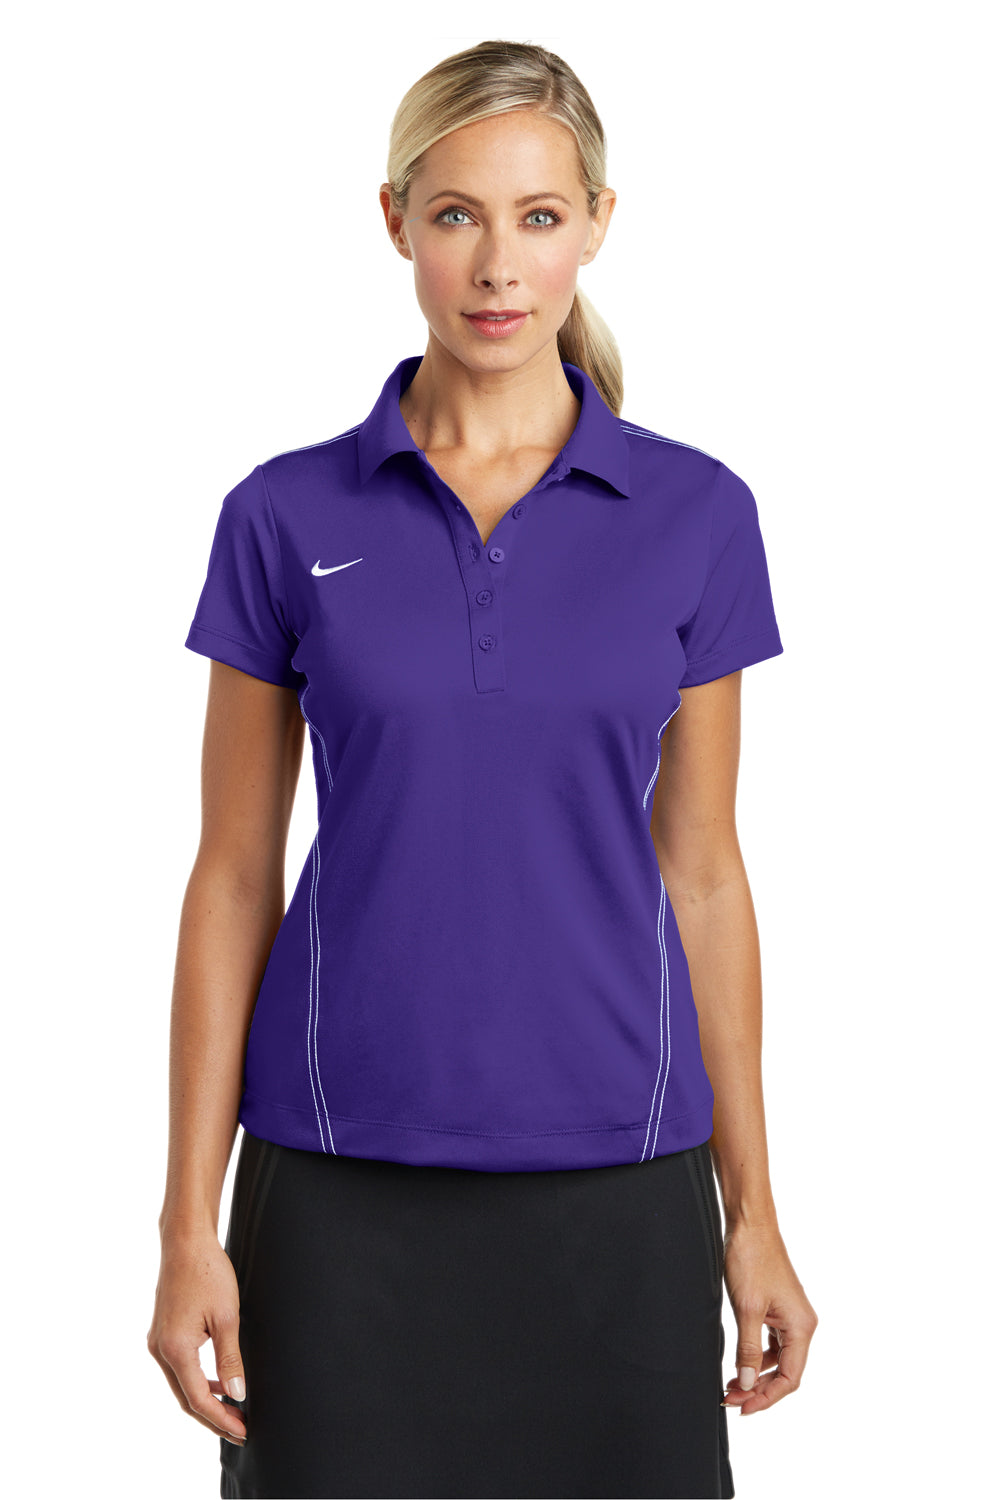 Nike 452885 Womens Sport Swoosh Dri-Fit Moisture Wicking Short Sleeve Polo Shirt Purple Front